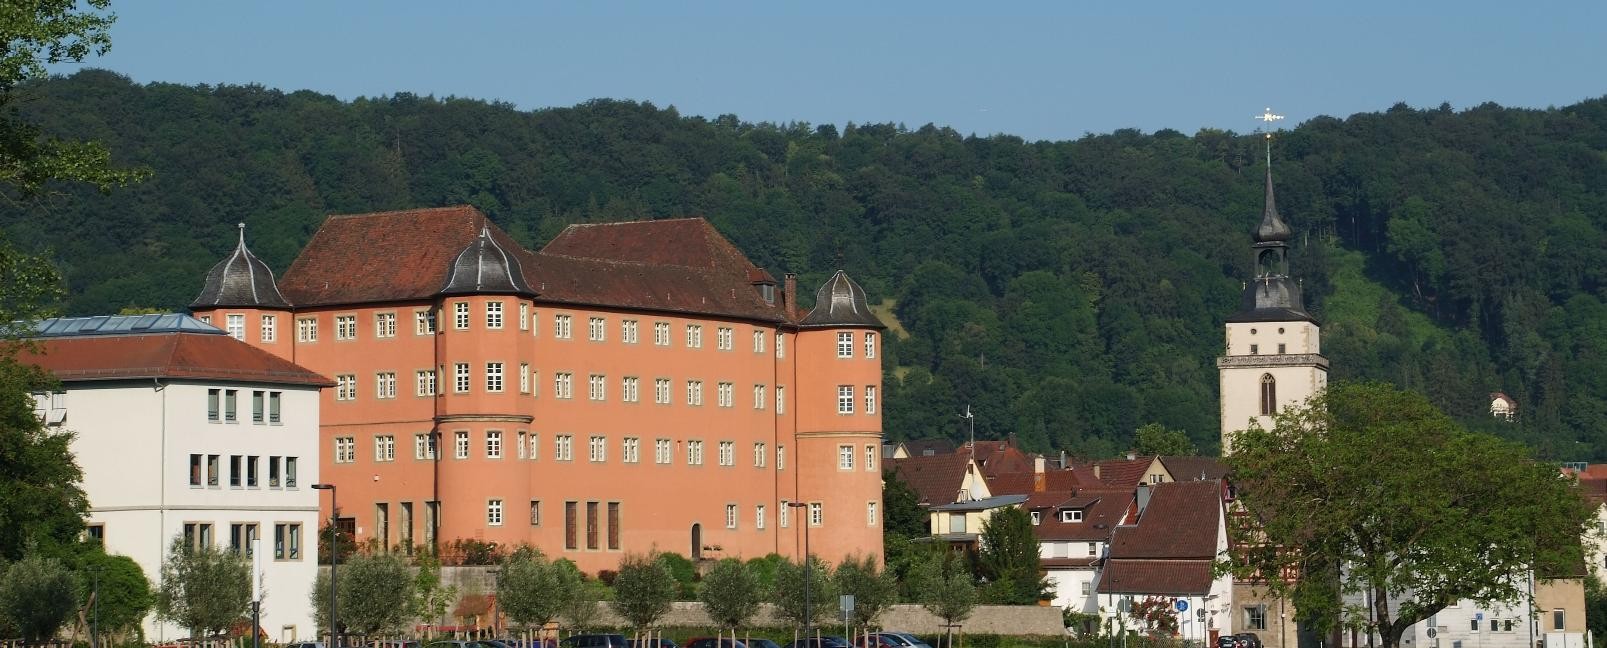 Blick auf das Schloss Bartenau.